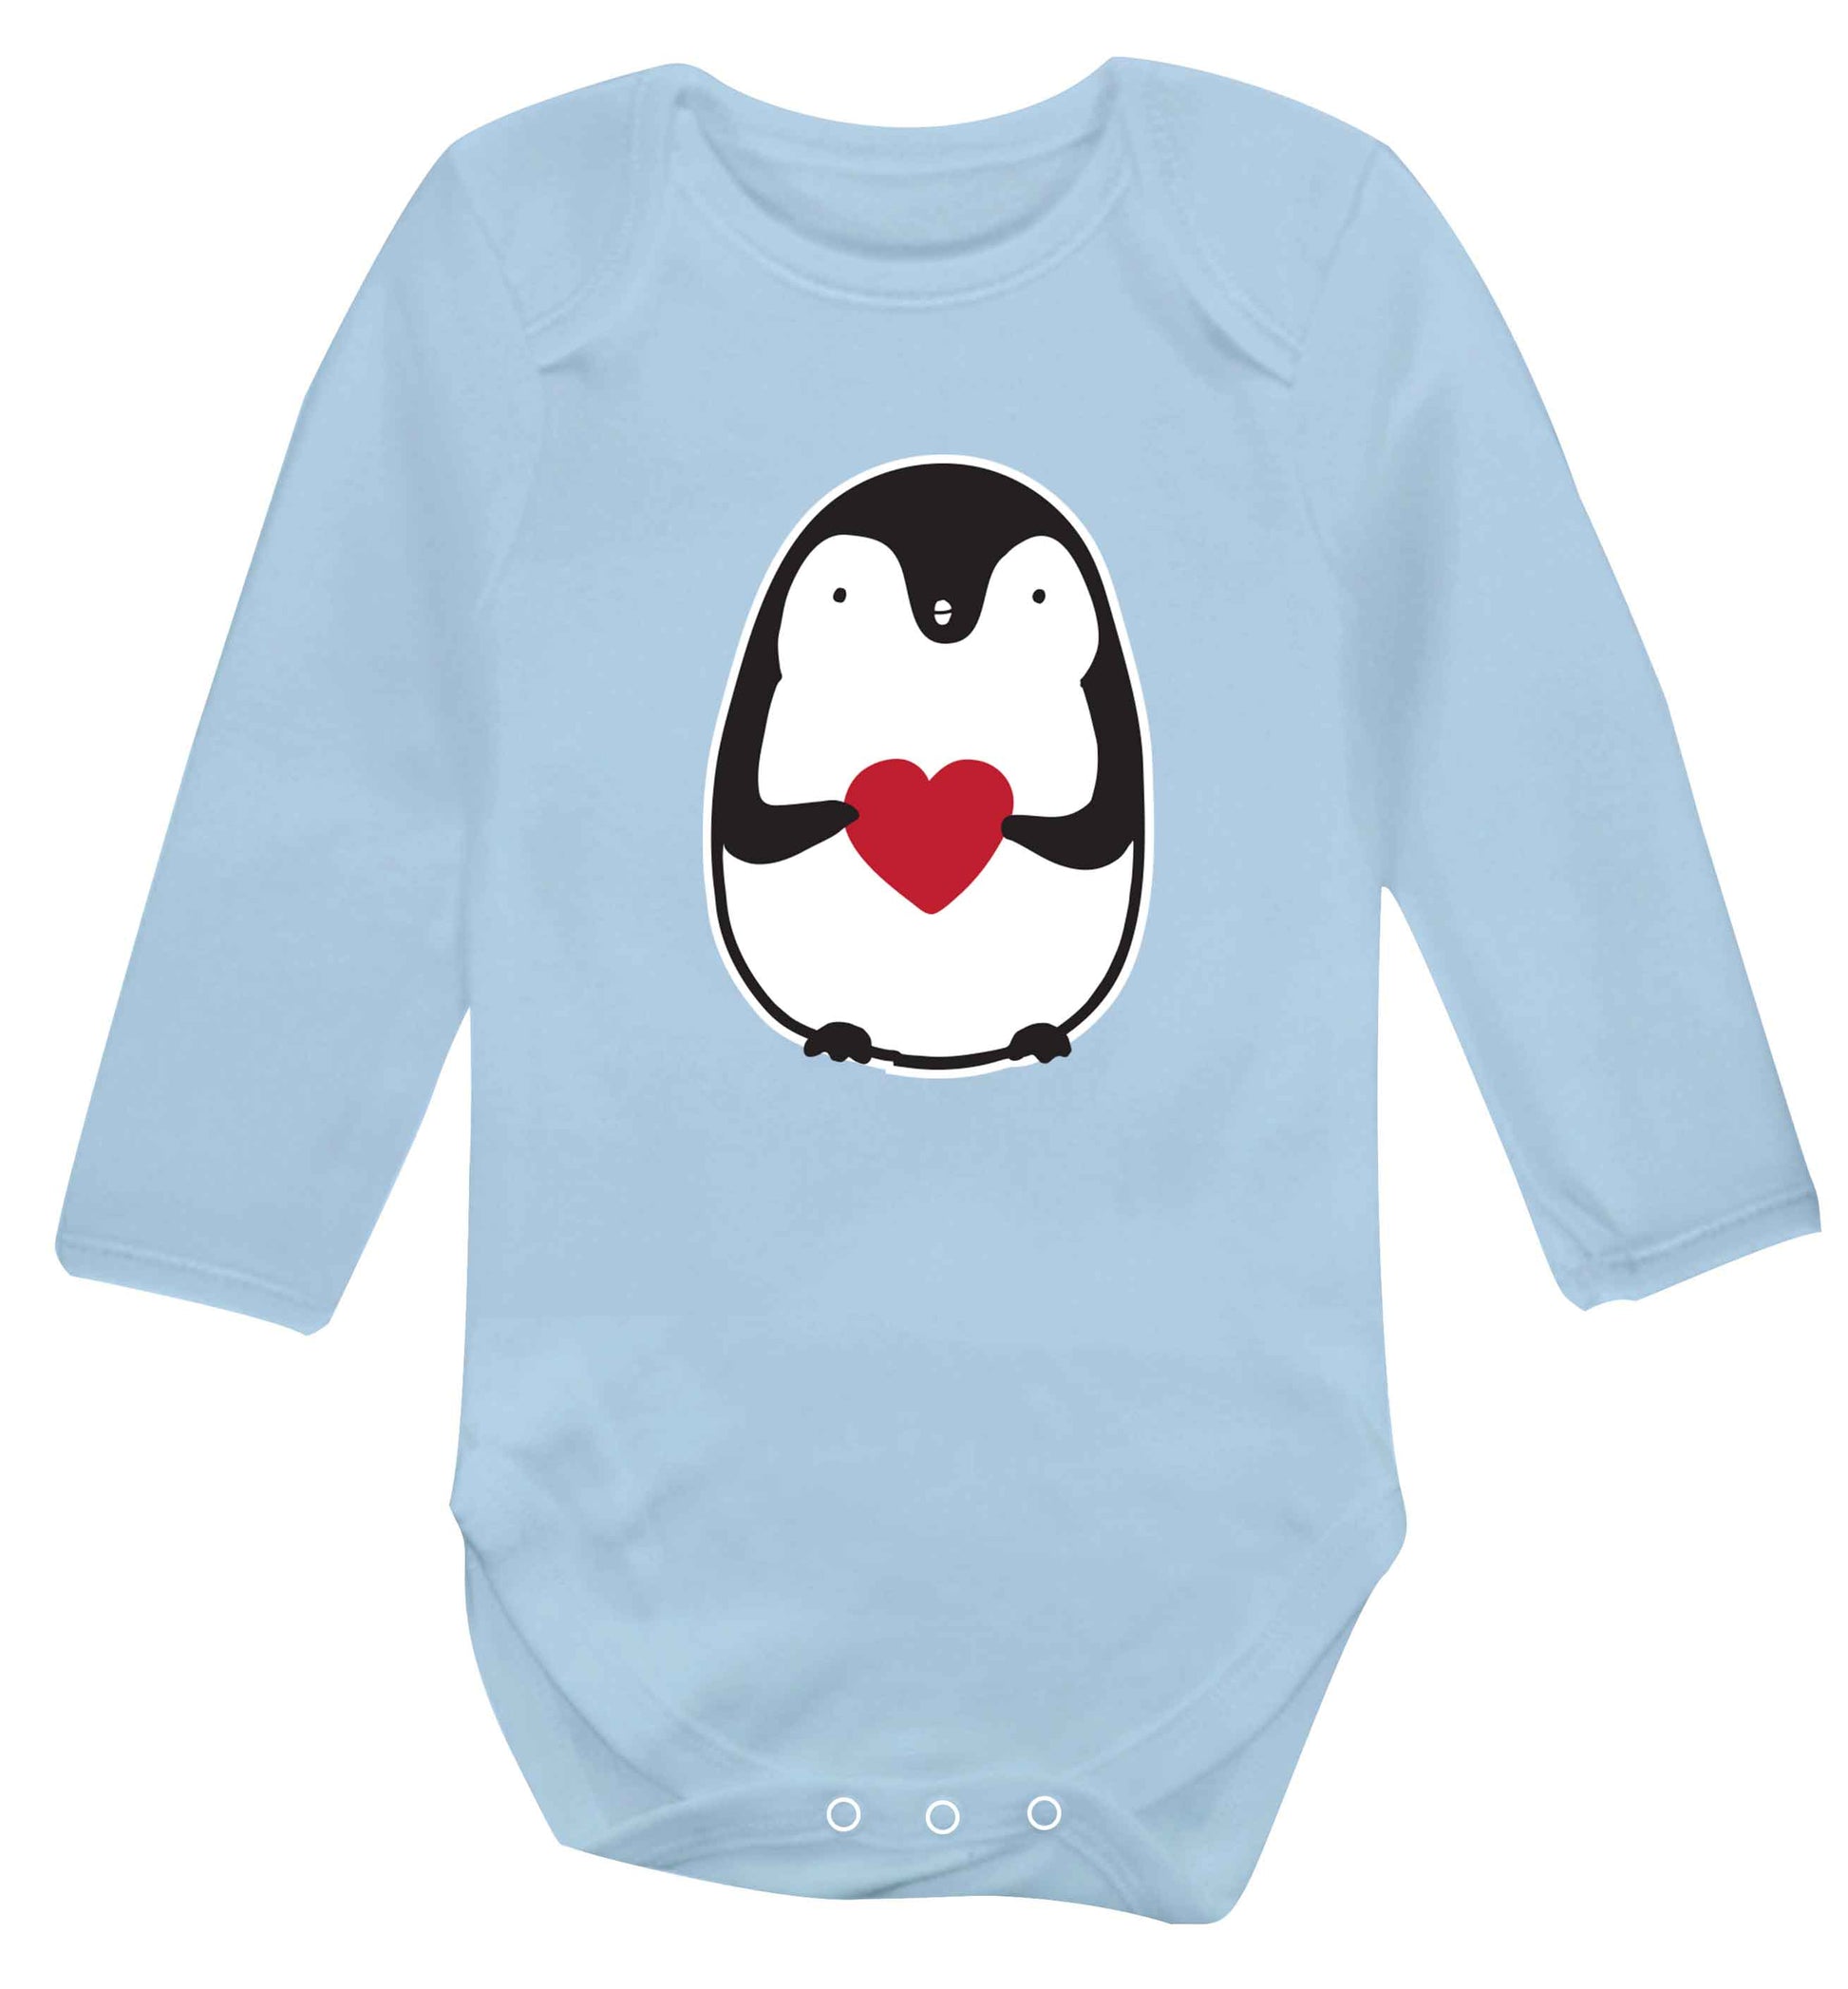 Cute penguin heart baby vest long sleeved pale blue 6-12 months